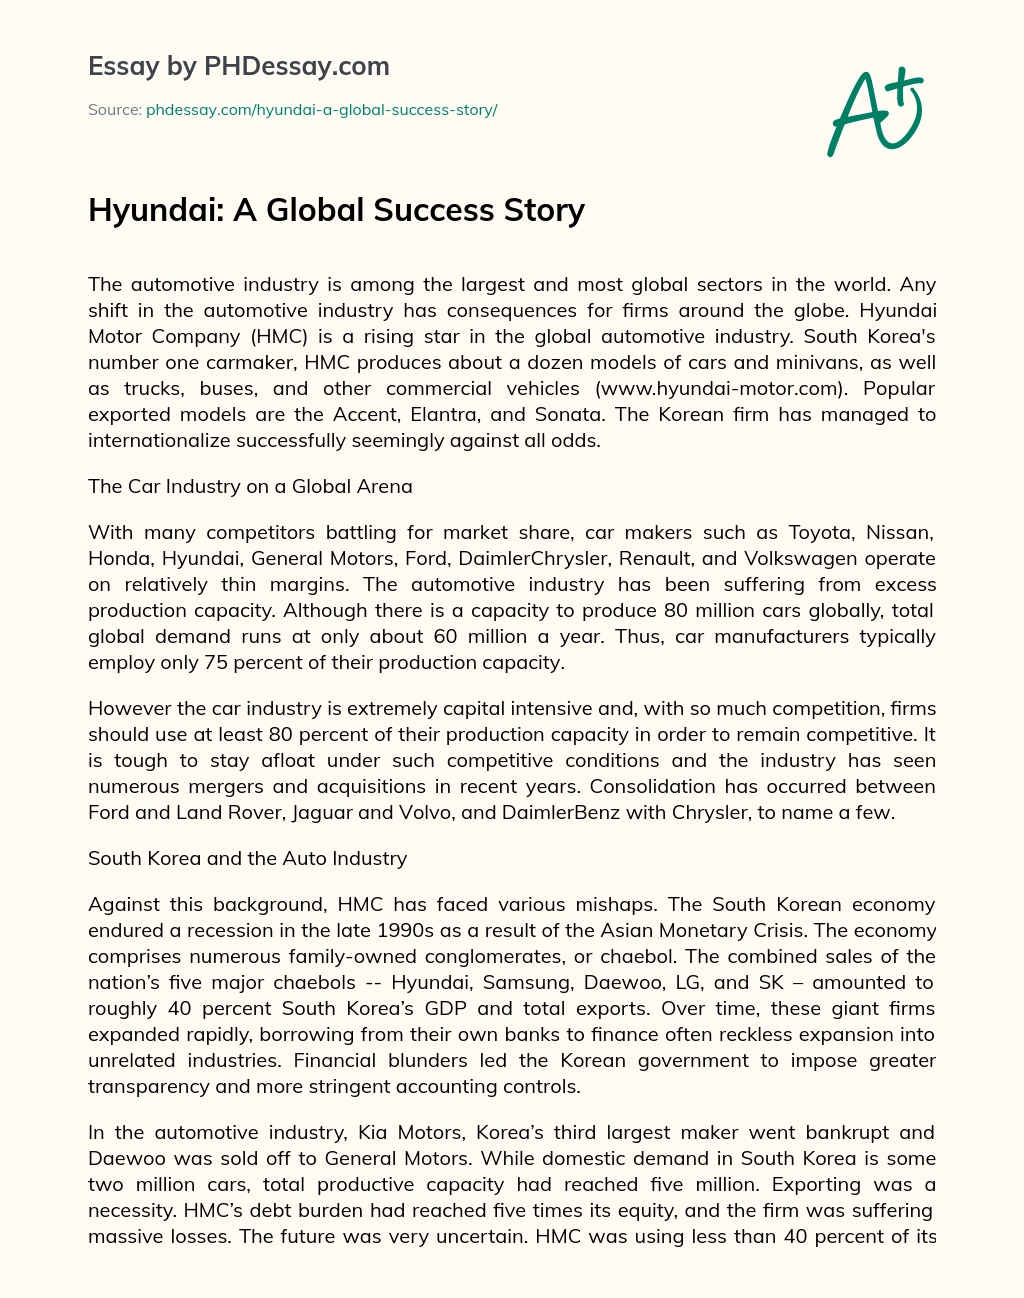 Hyundai: A Global Success Story essay